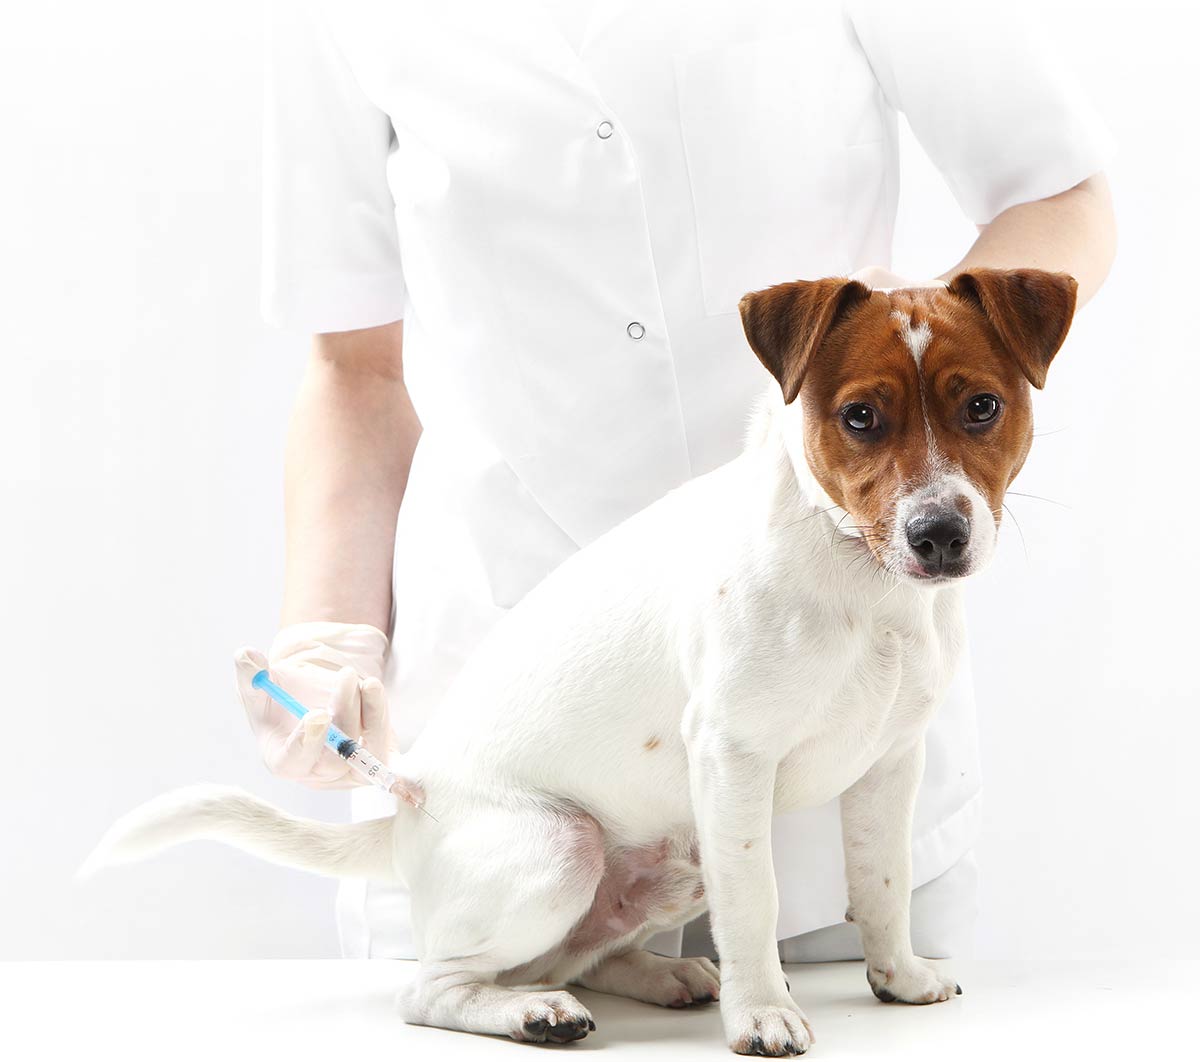 Services - Pet Grooming, Boarding, Puppy Preschool & Dog Training